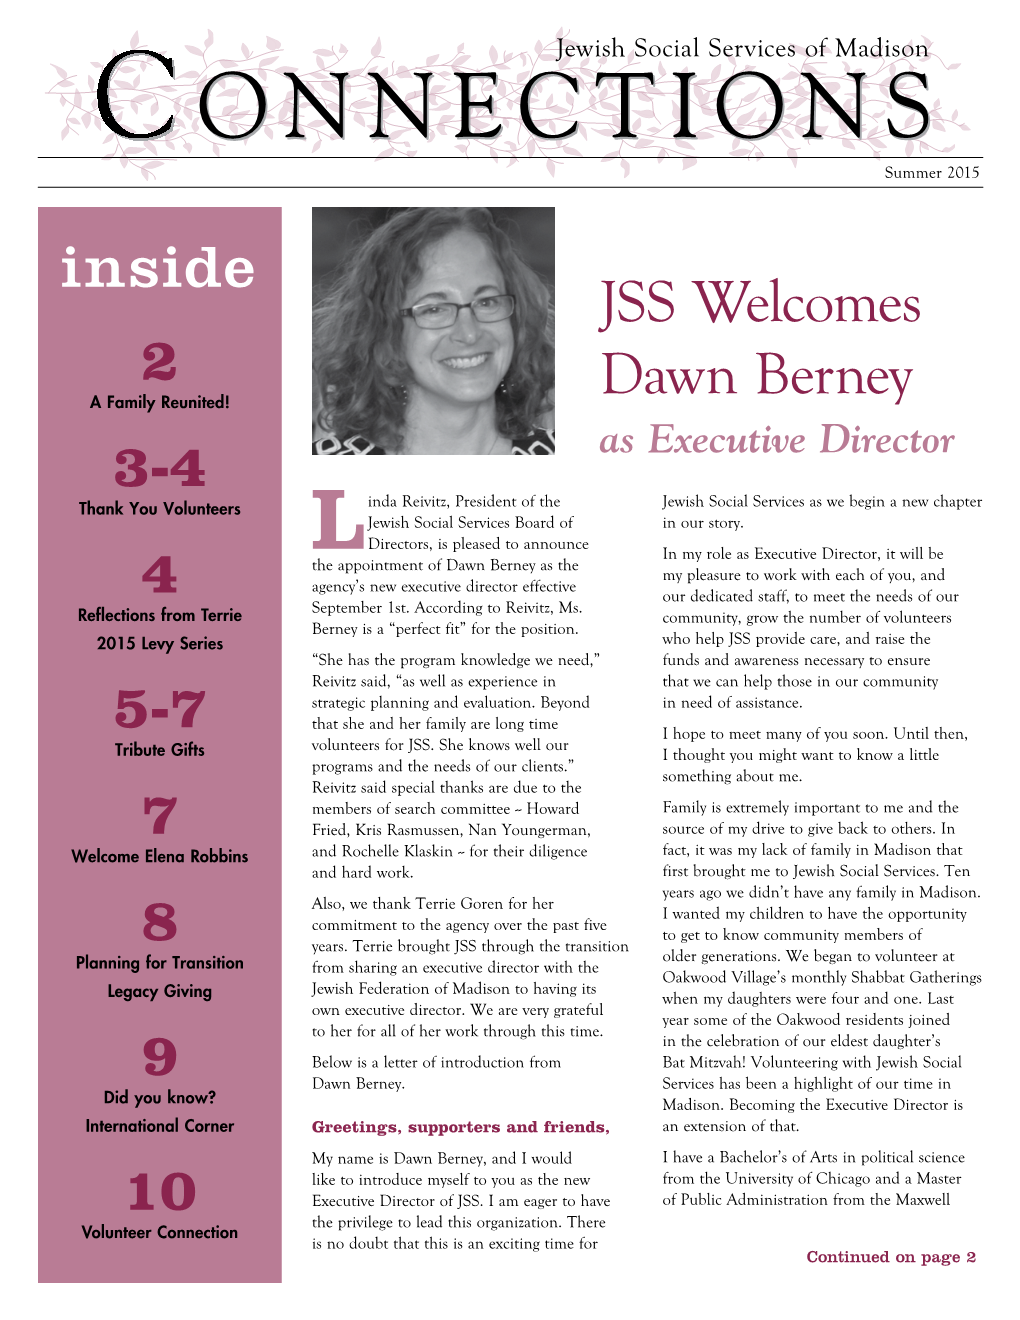 JSS Welcomes Dawn Berney Inside 2 3-4 4 5-7 7 8 9 10